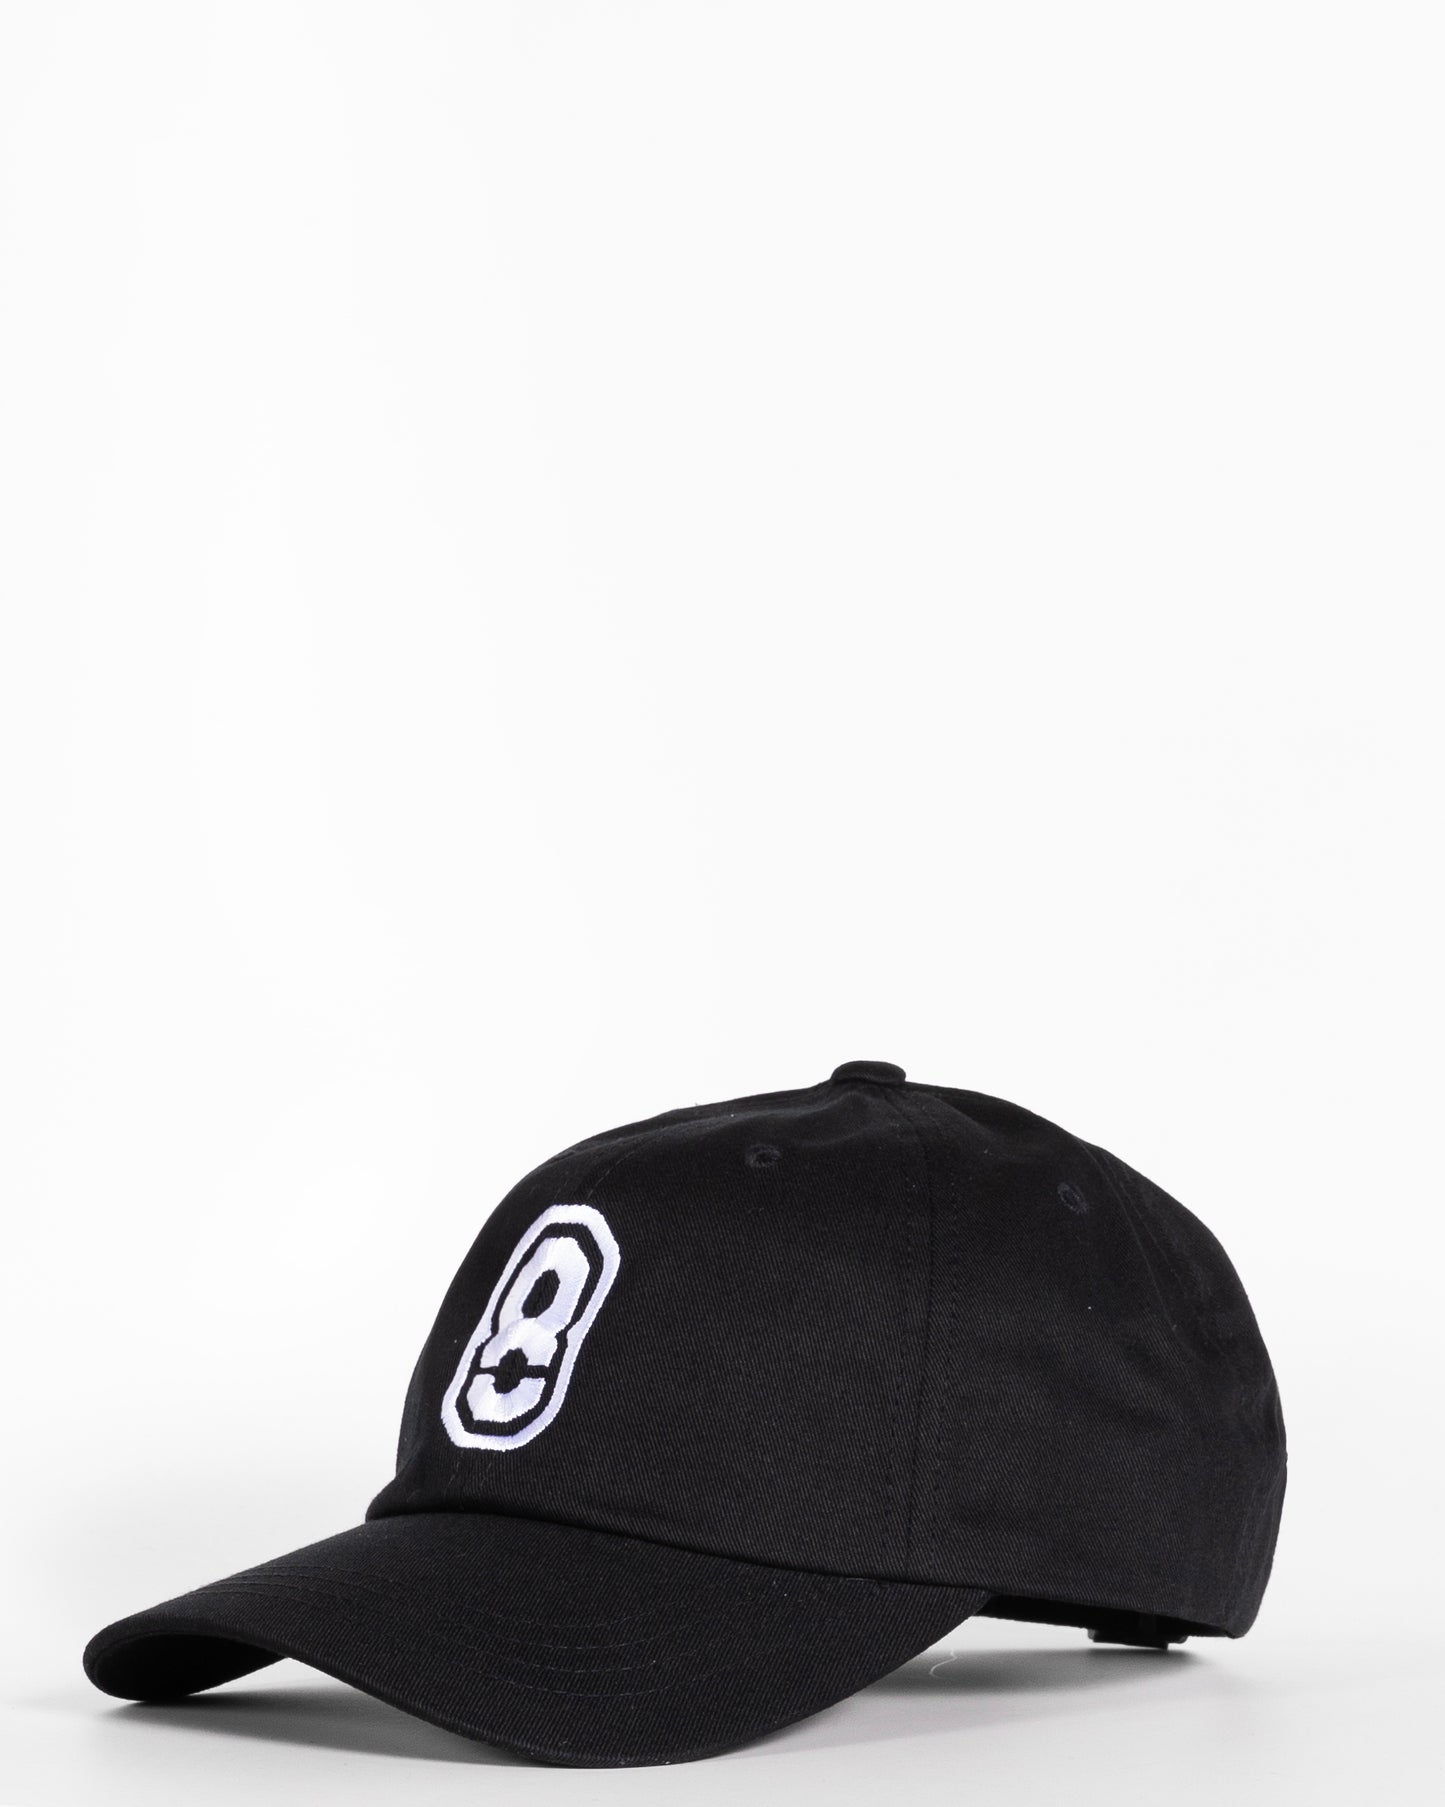 Black Dad Hat - 8 Logo